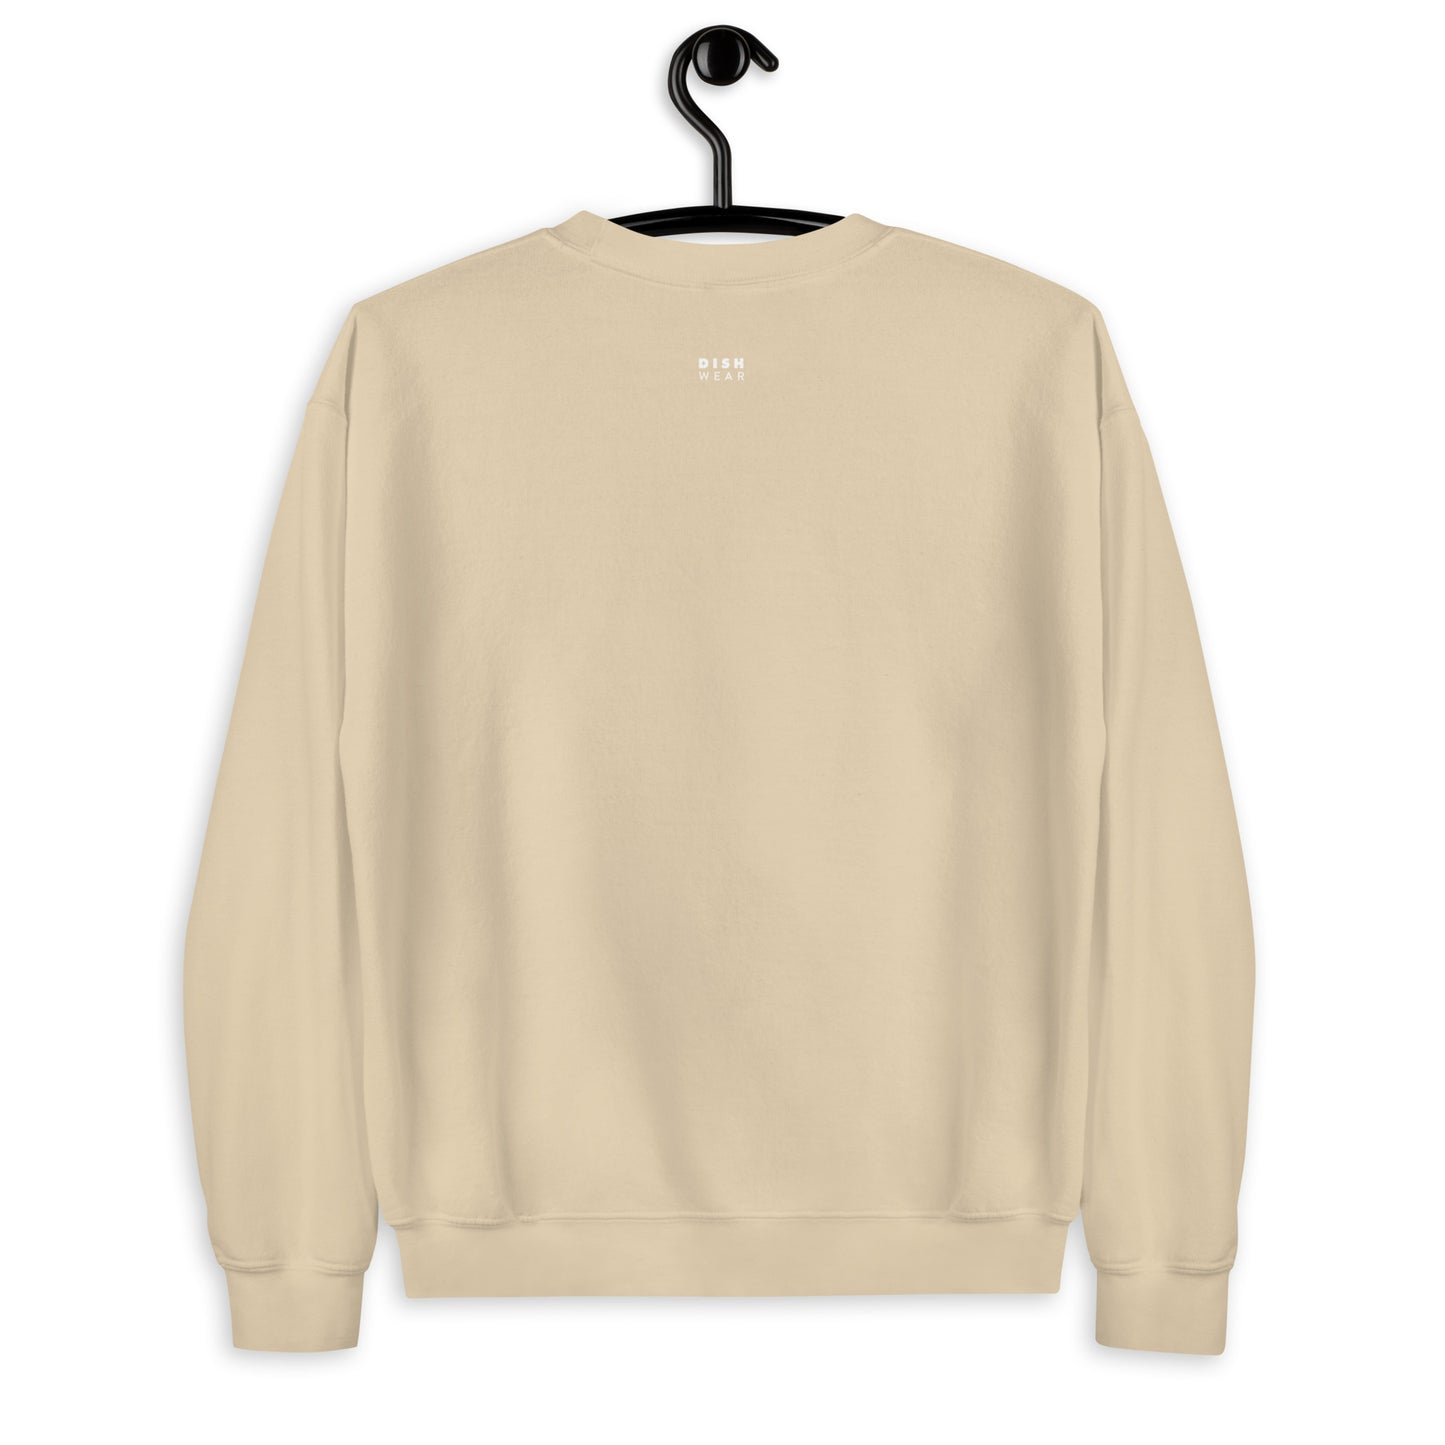 Truffles Sweatshirt - Straight Font